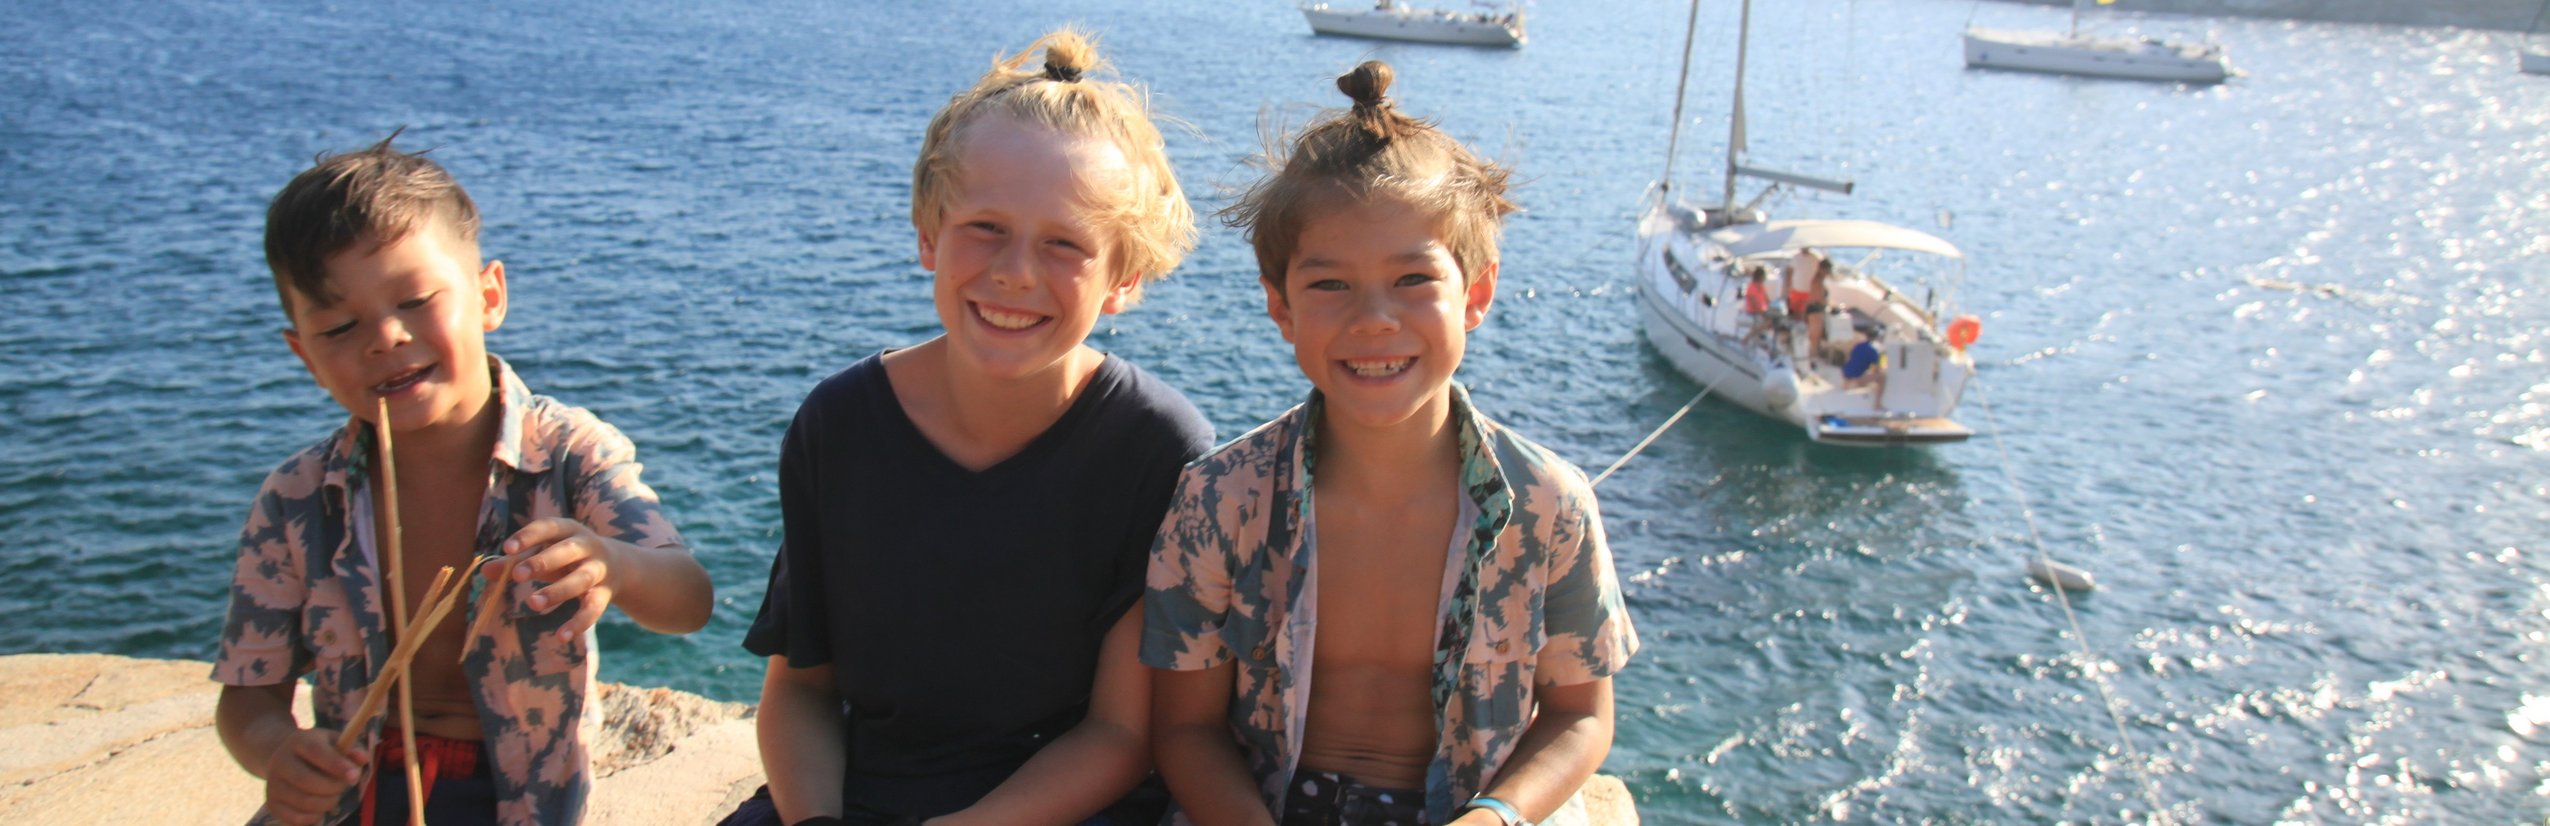 Segeln mit Familie - Segeln mit Kindern - Segelurlaub mit Kindern - Segeltörn mit Kindern - Griechenland - Kinder am Meer